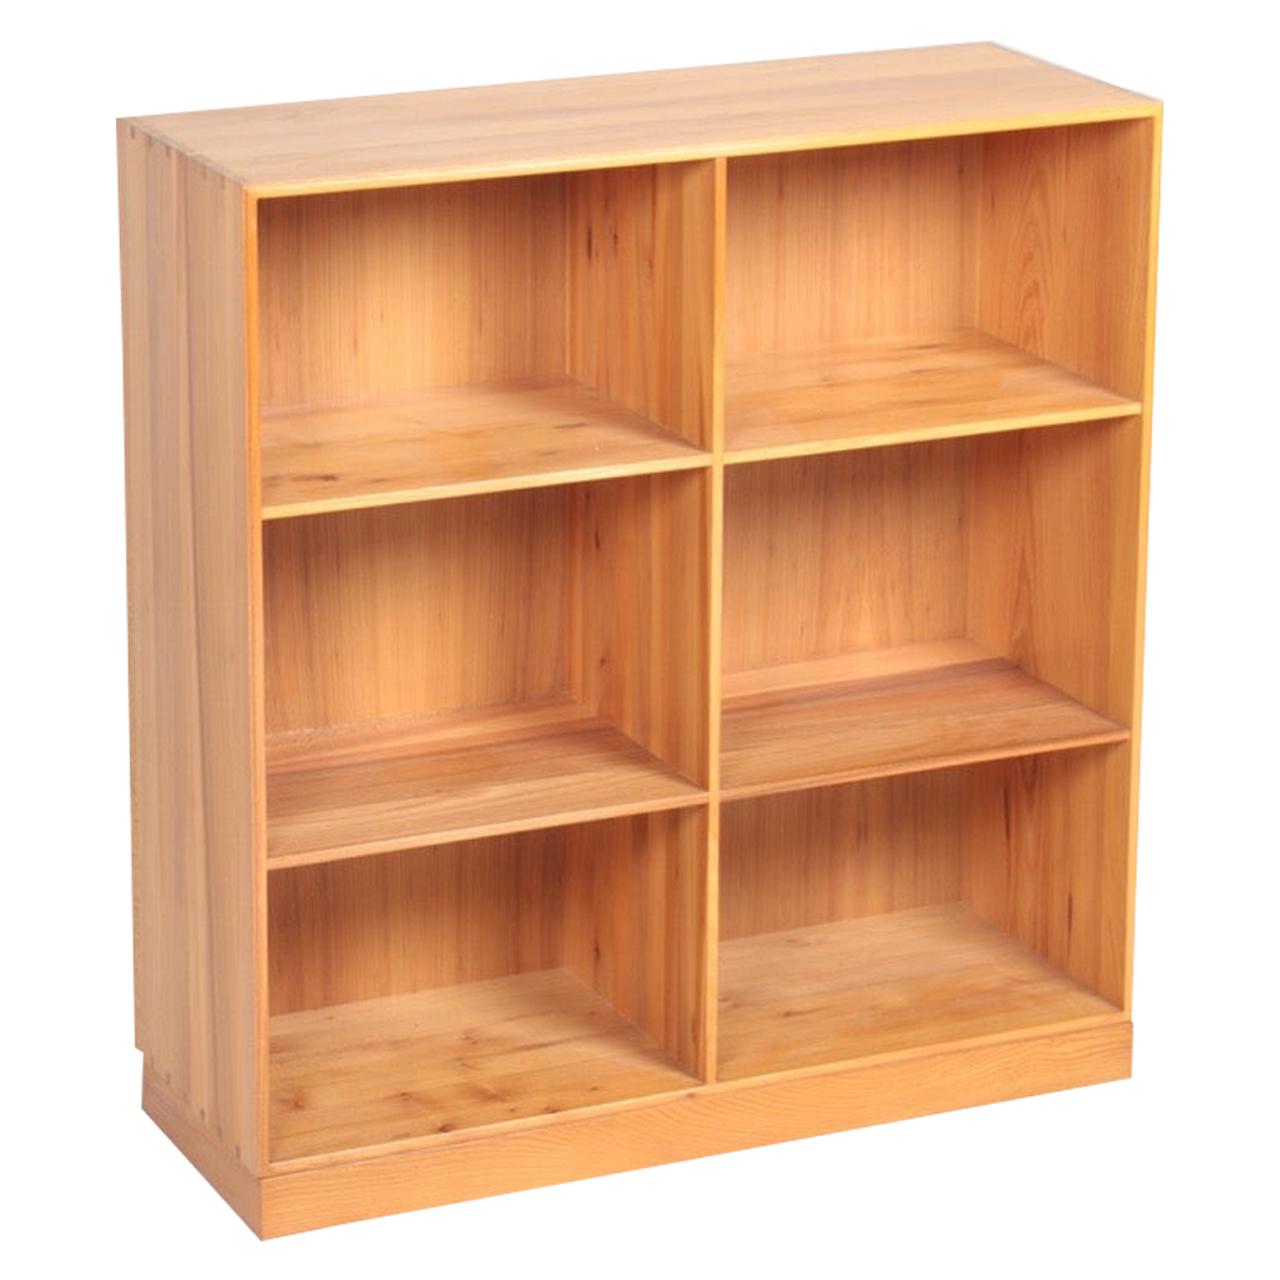 Midcentury Bookcase in Elm Designed by Mogens Koch, Danish Design